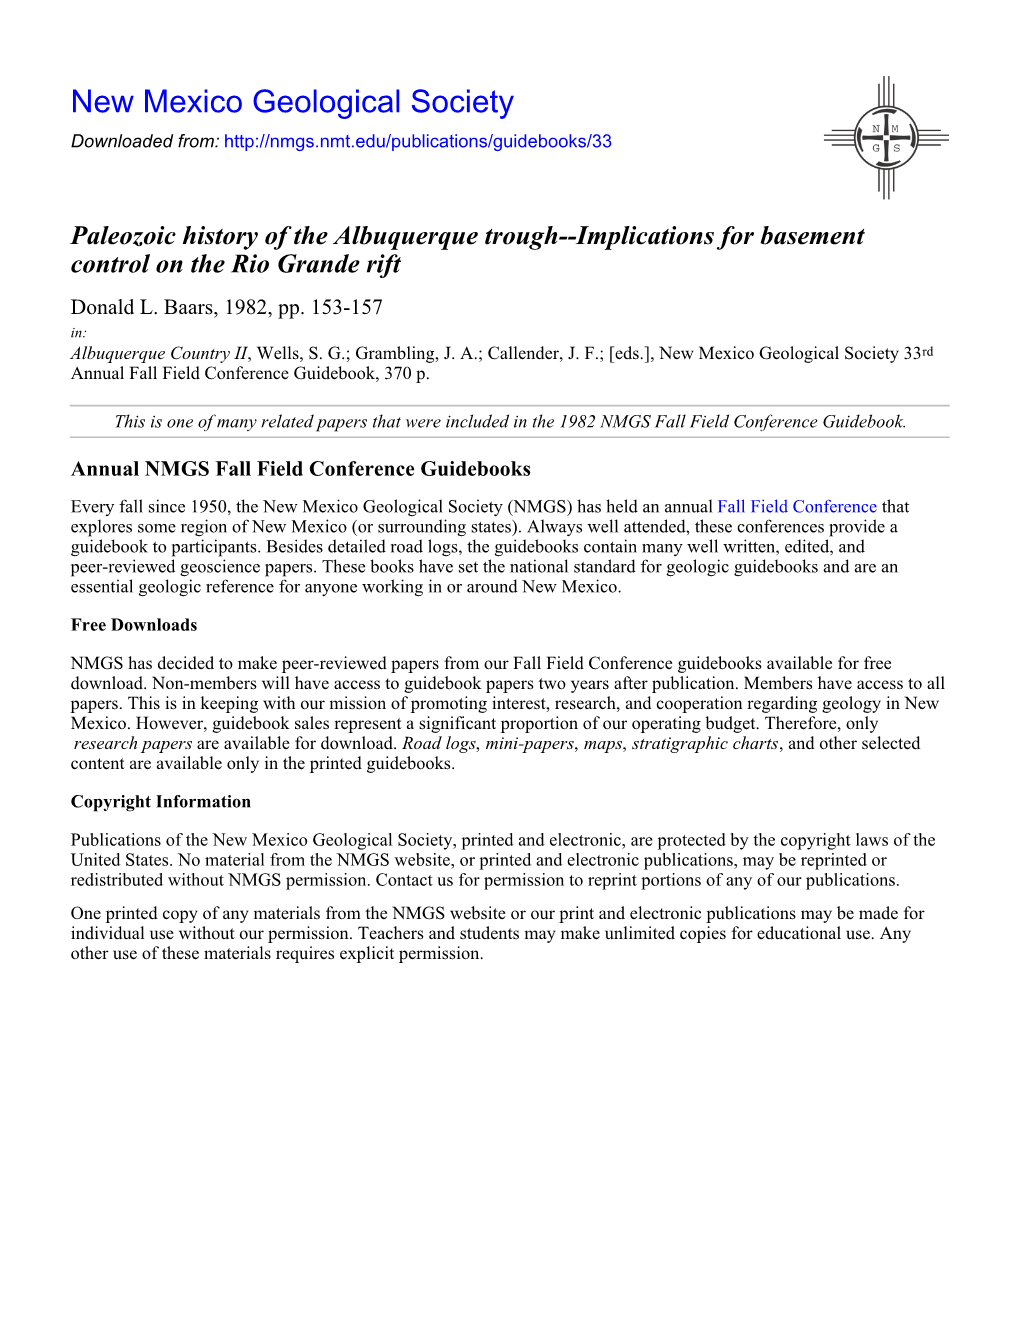 Paleozoic History of the Albuquerque Trough--Implications for Basement Control on the Rio Grande Rift Donald L